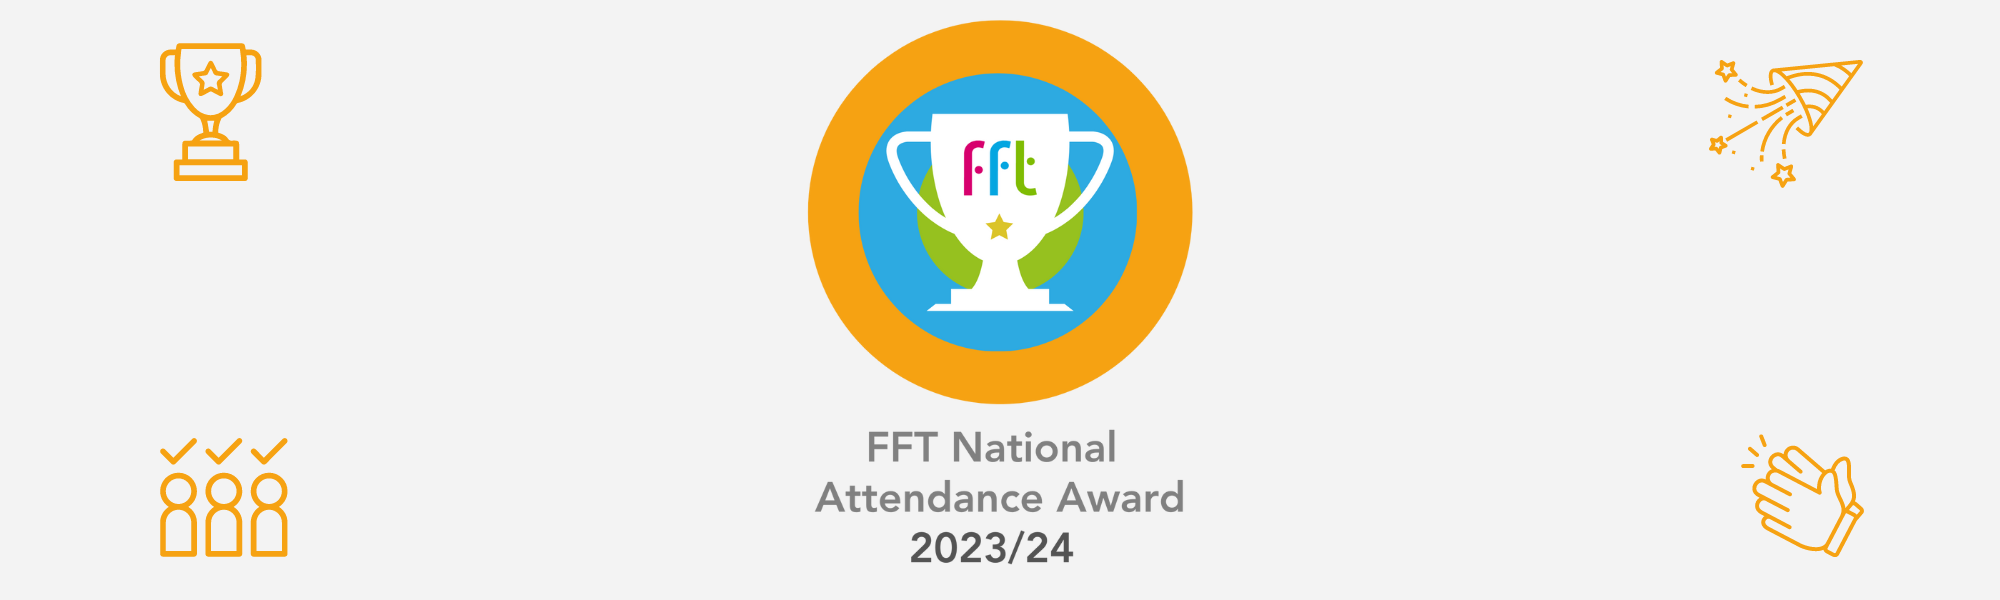 Fft attendance award logo